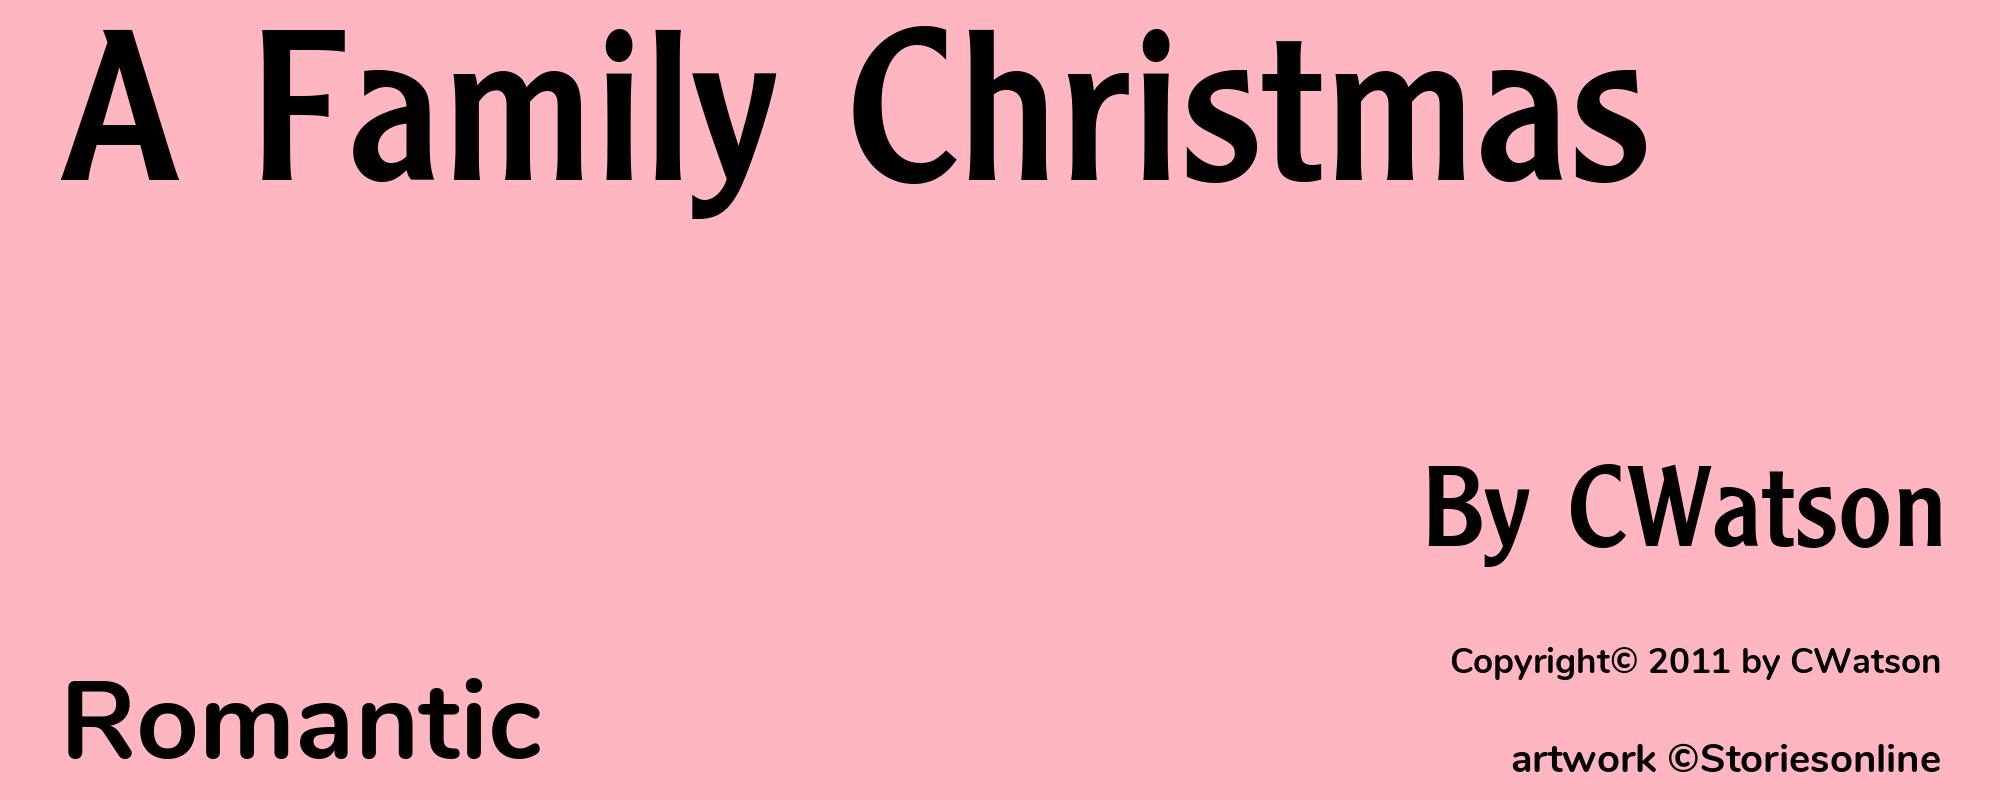 A Family Christmas - Cover